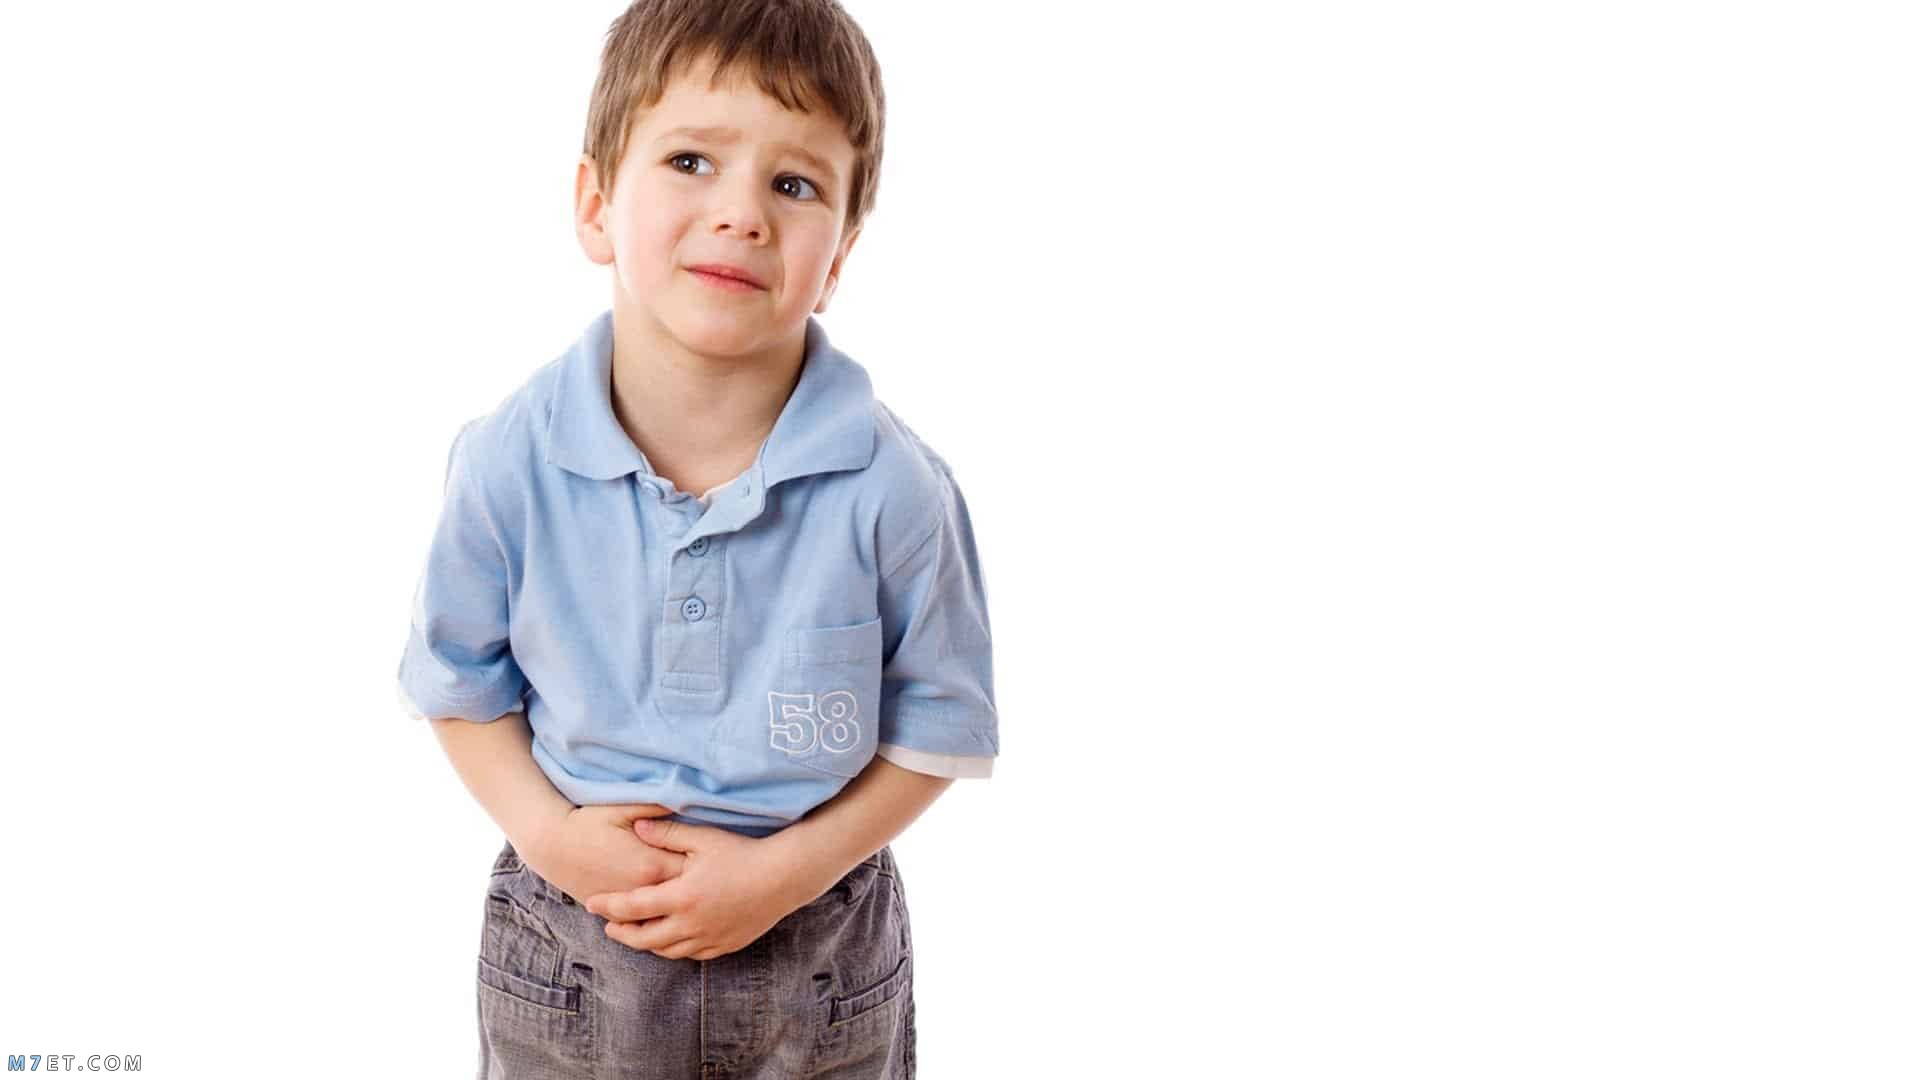 Treating infectious diarrhea in children 